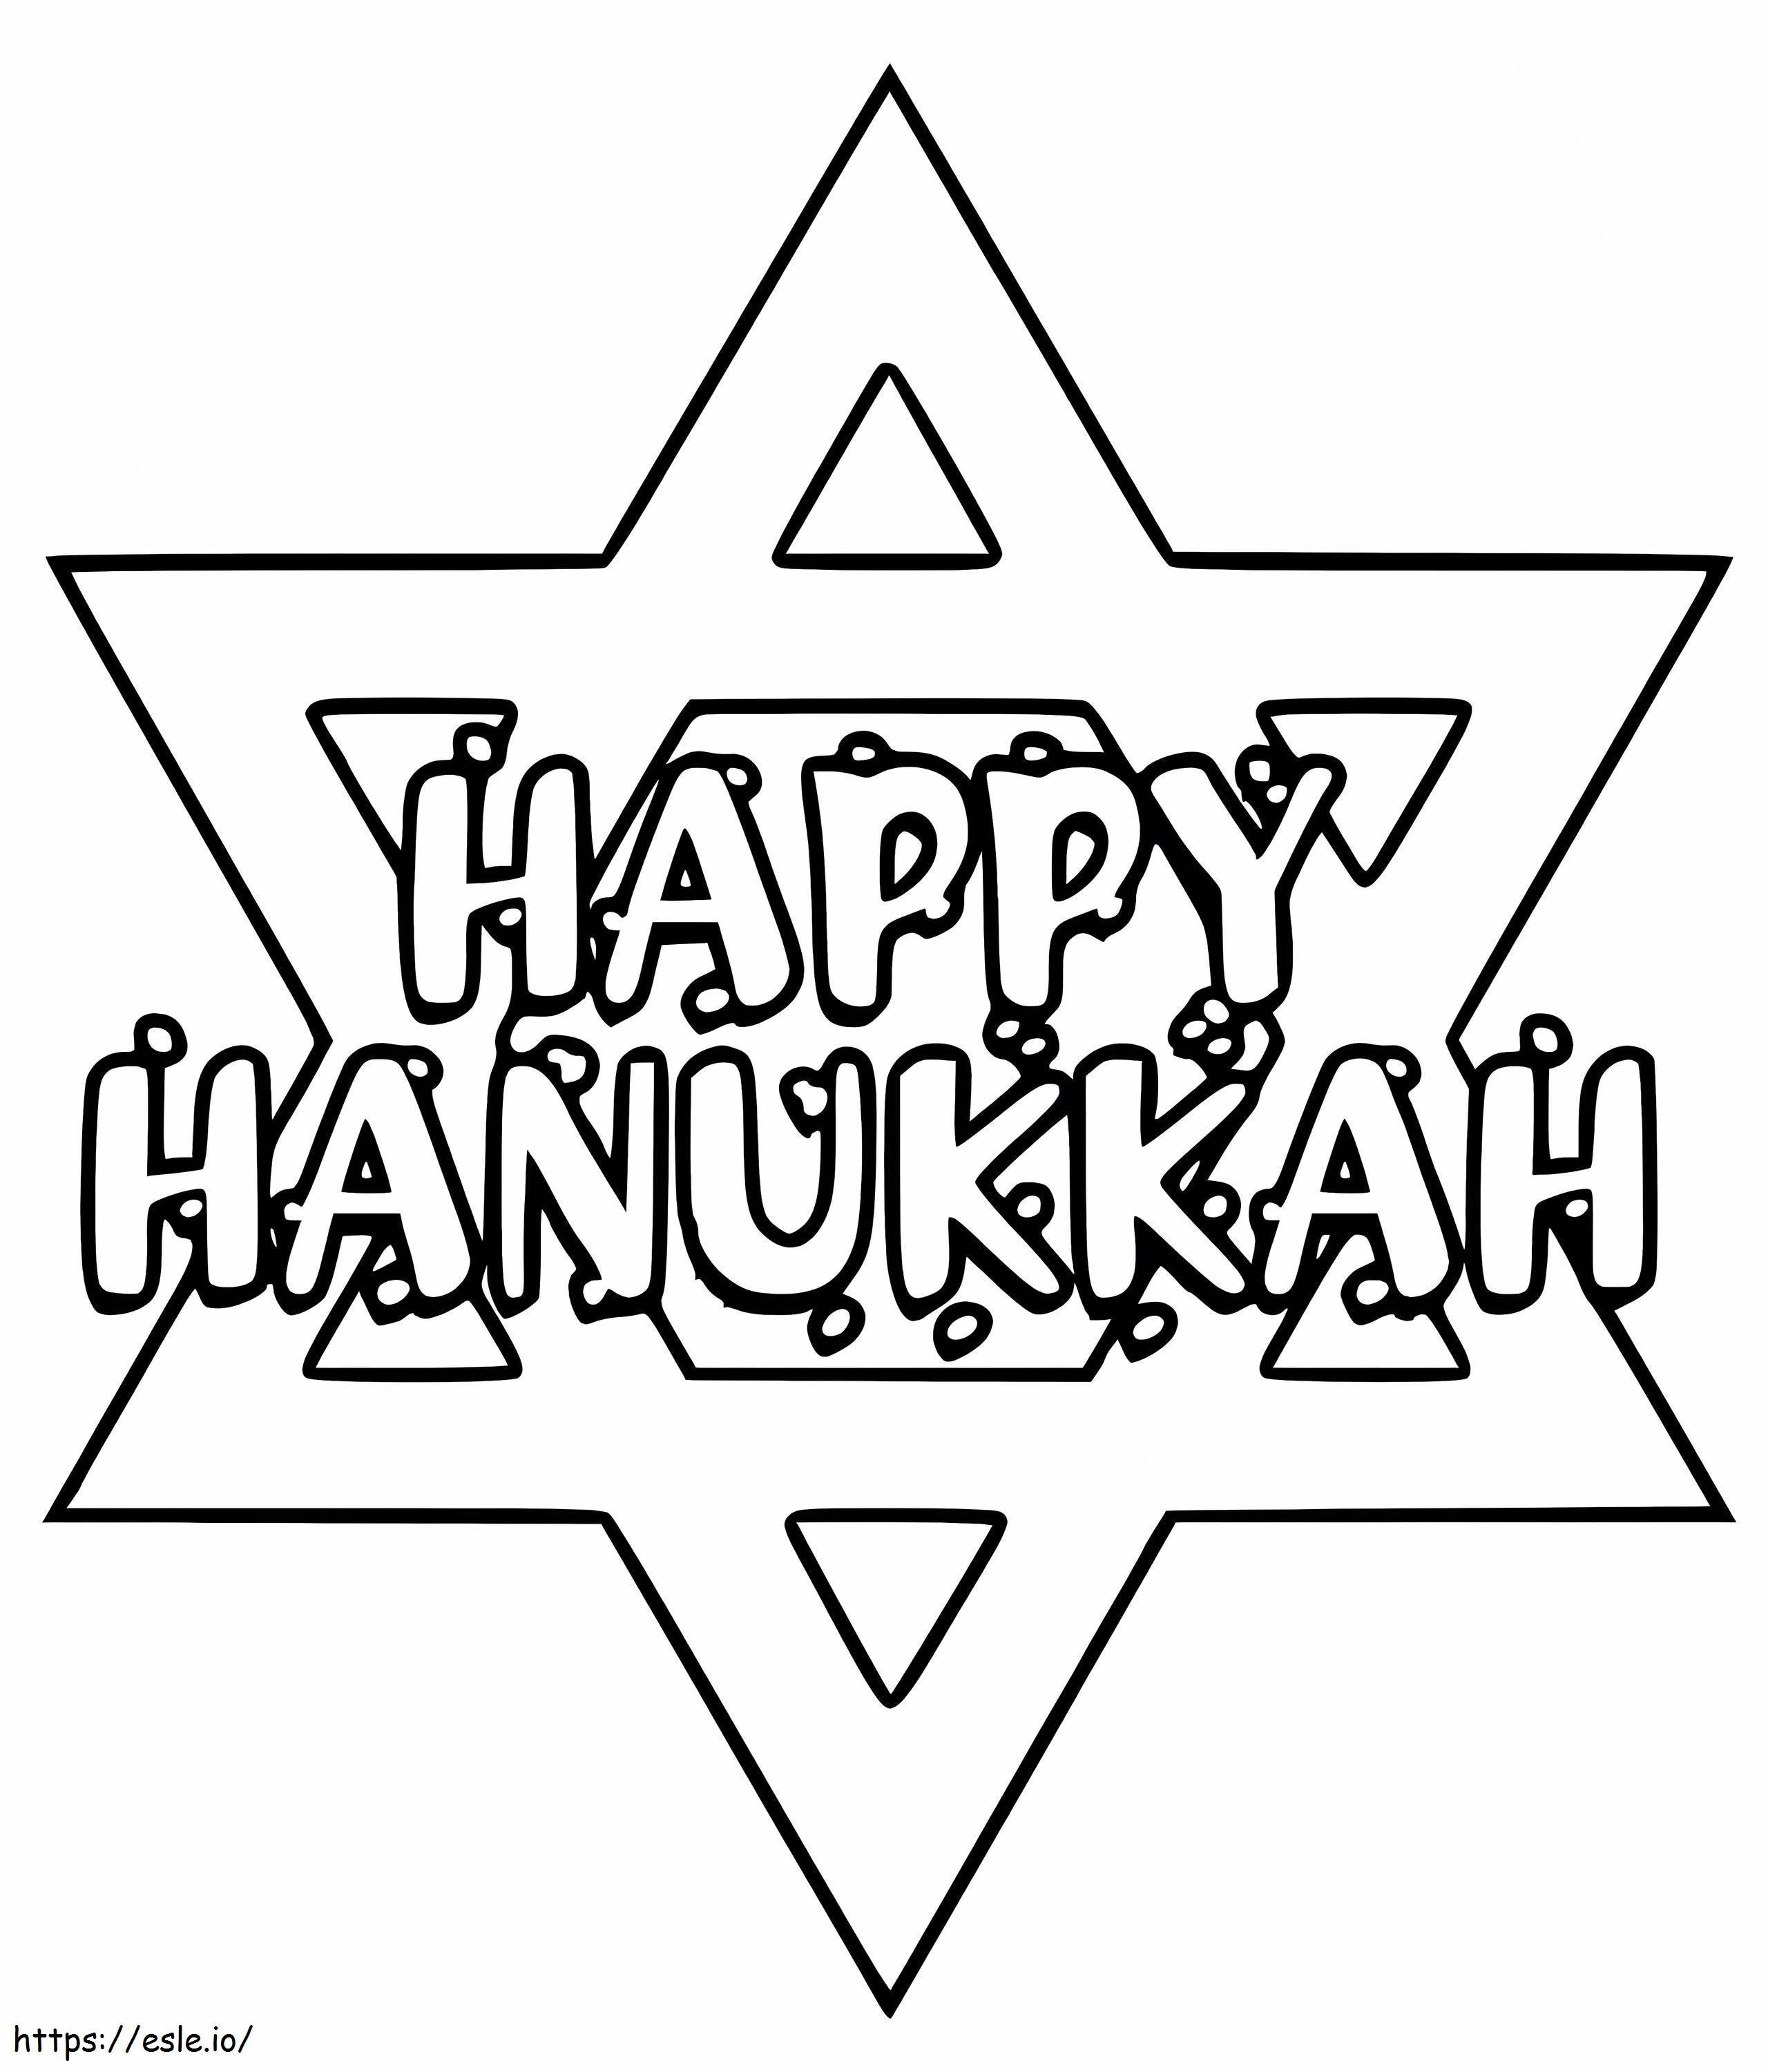 Felice Hanukkah stampabile gratuitamente da colorare